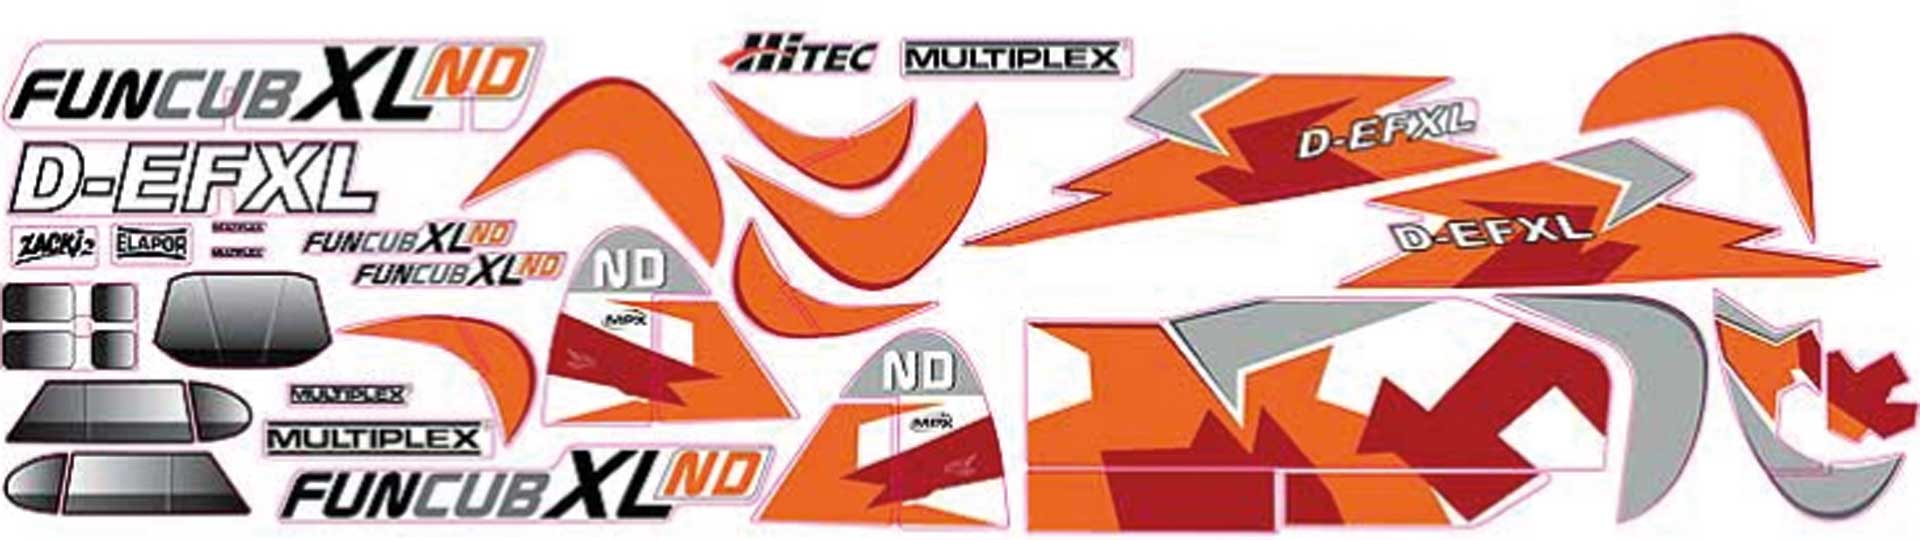 MULTIPLEX Autocollants FunCub XL ND